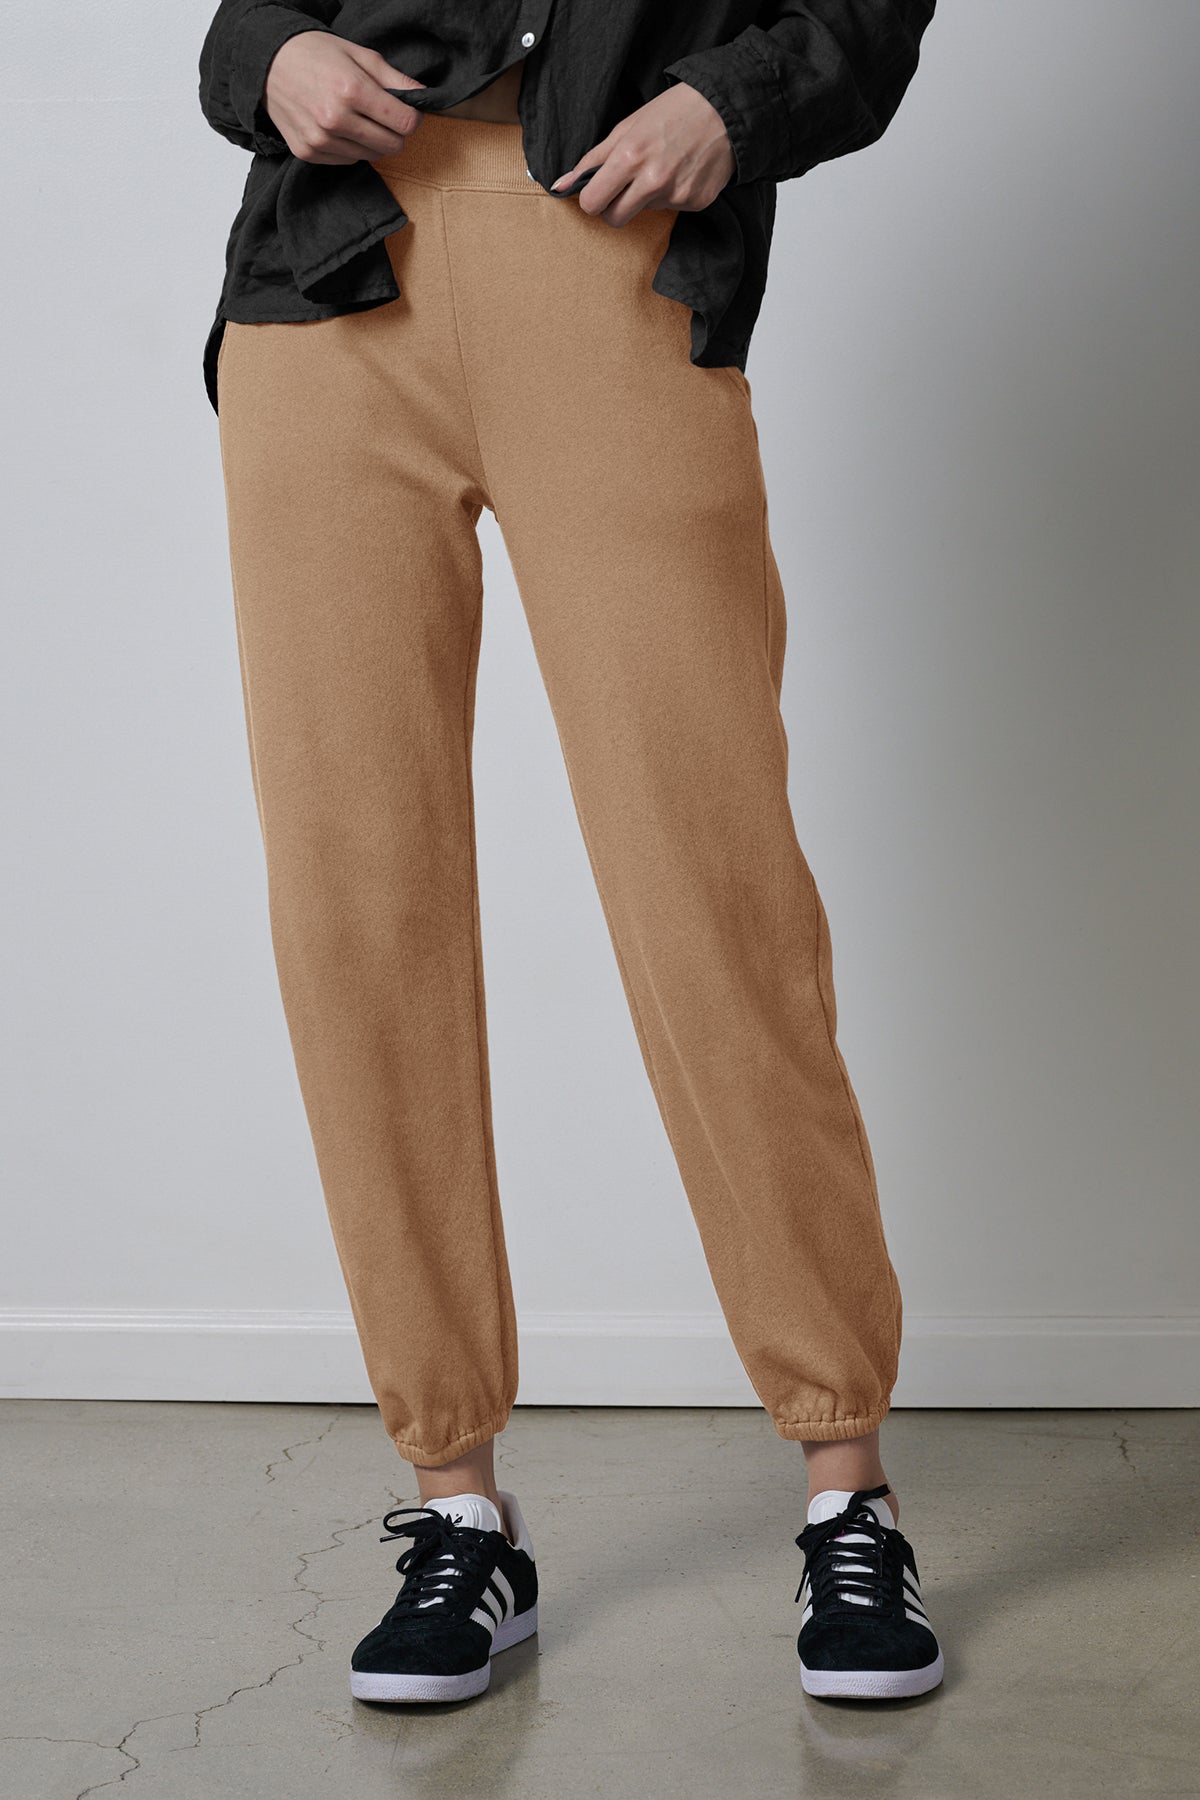 Velvet by Jenny Graham ZUMA SWEATPANT women's jogger pants in camel-36594727747777